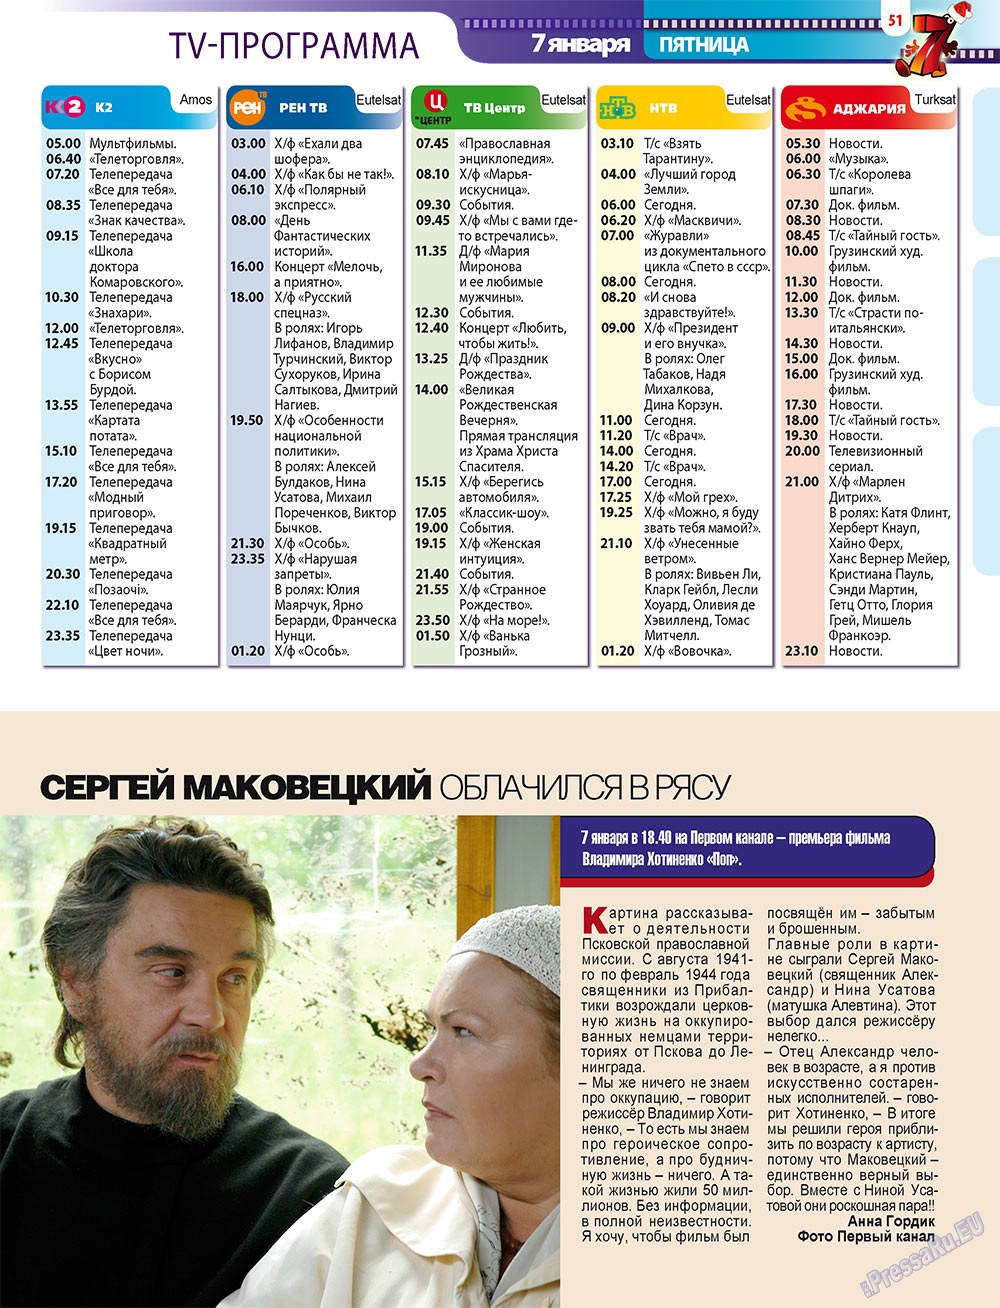 7плюс7я (журнал). 2010 год, номер 52, стр. 51